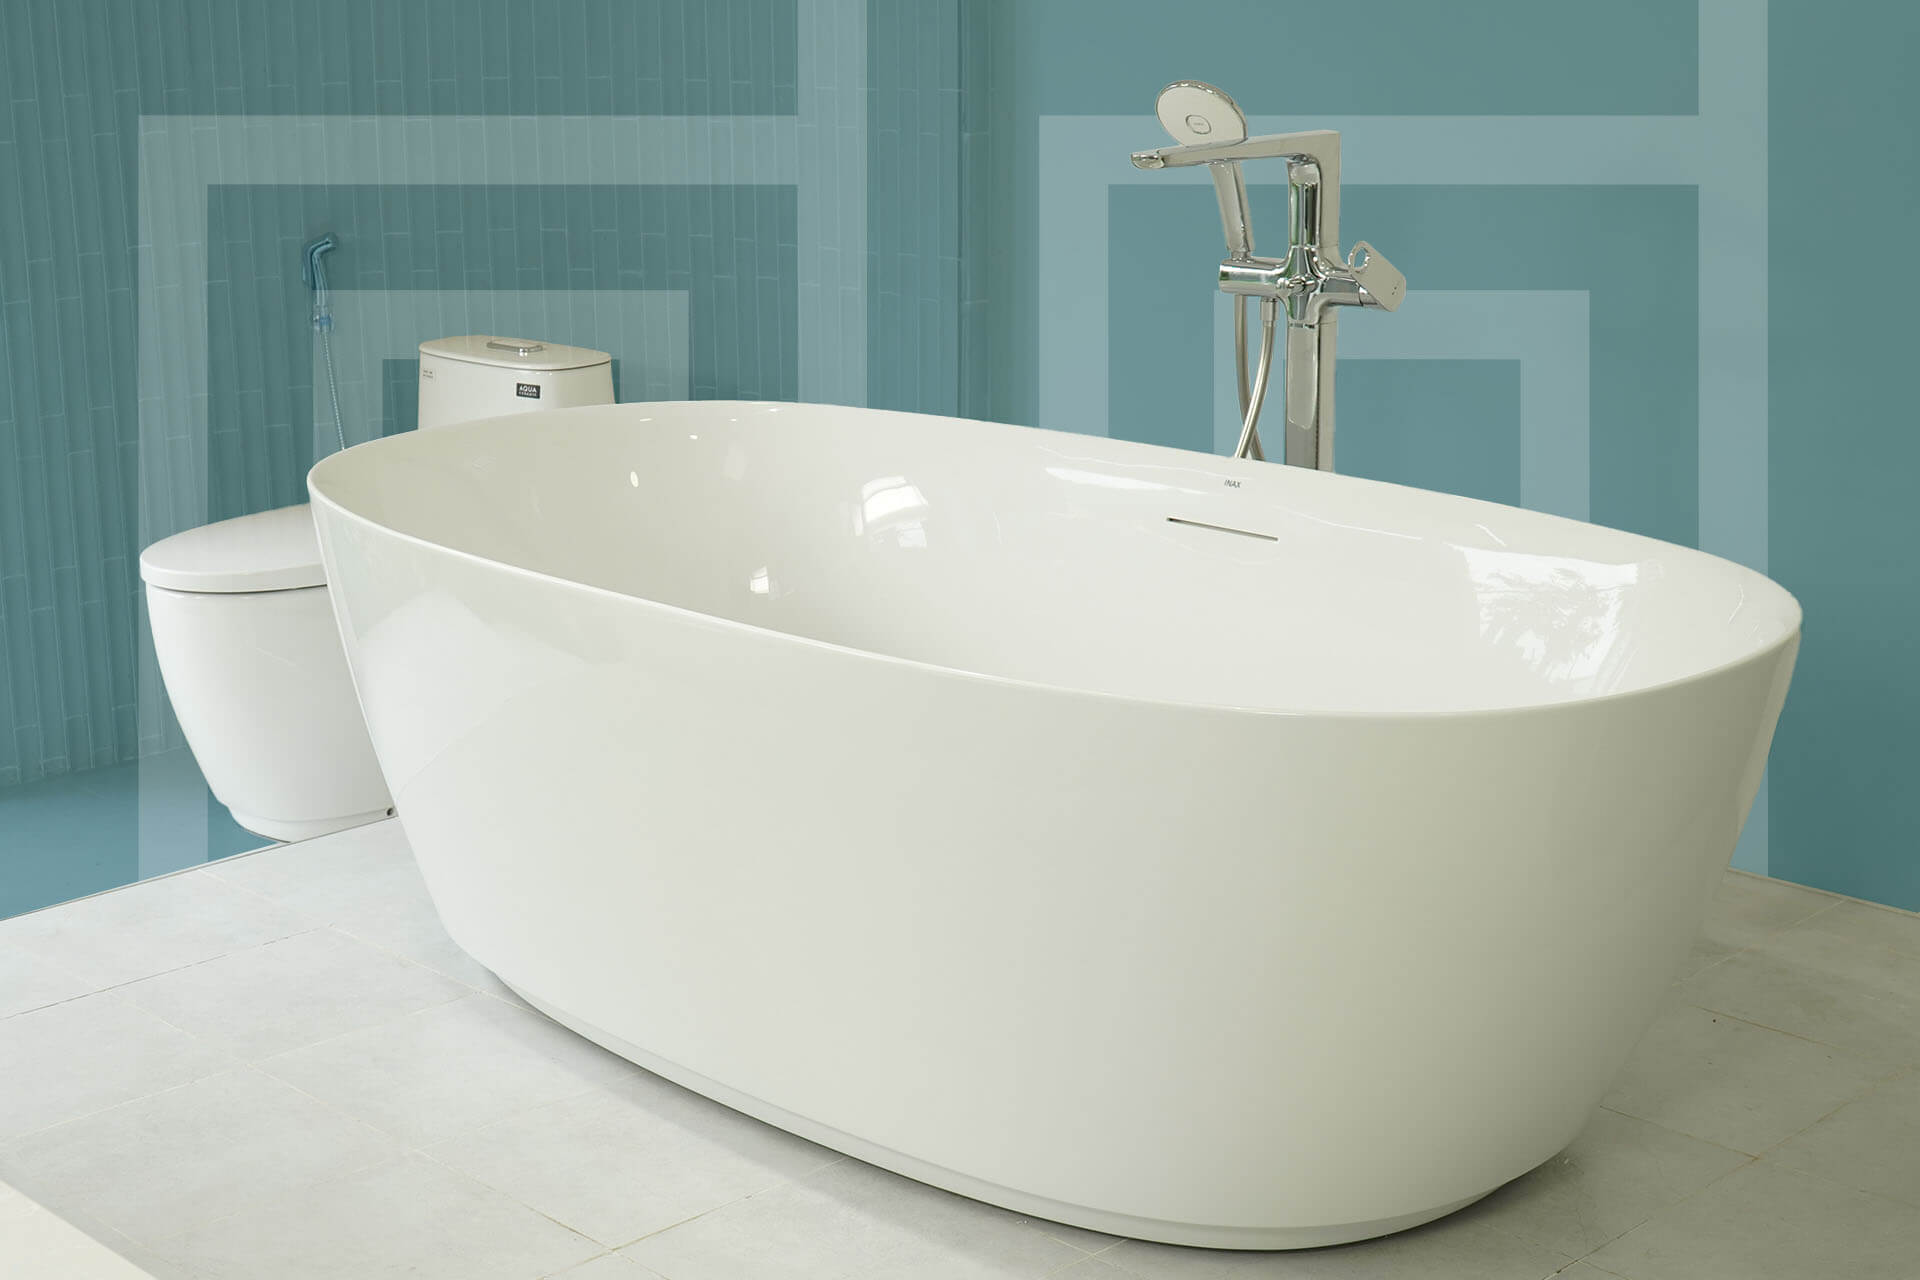 feature-how-to-clean-a-bathtub